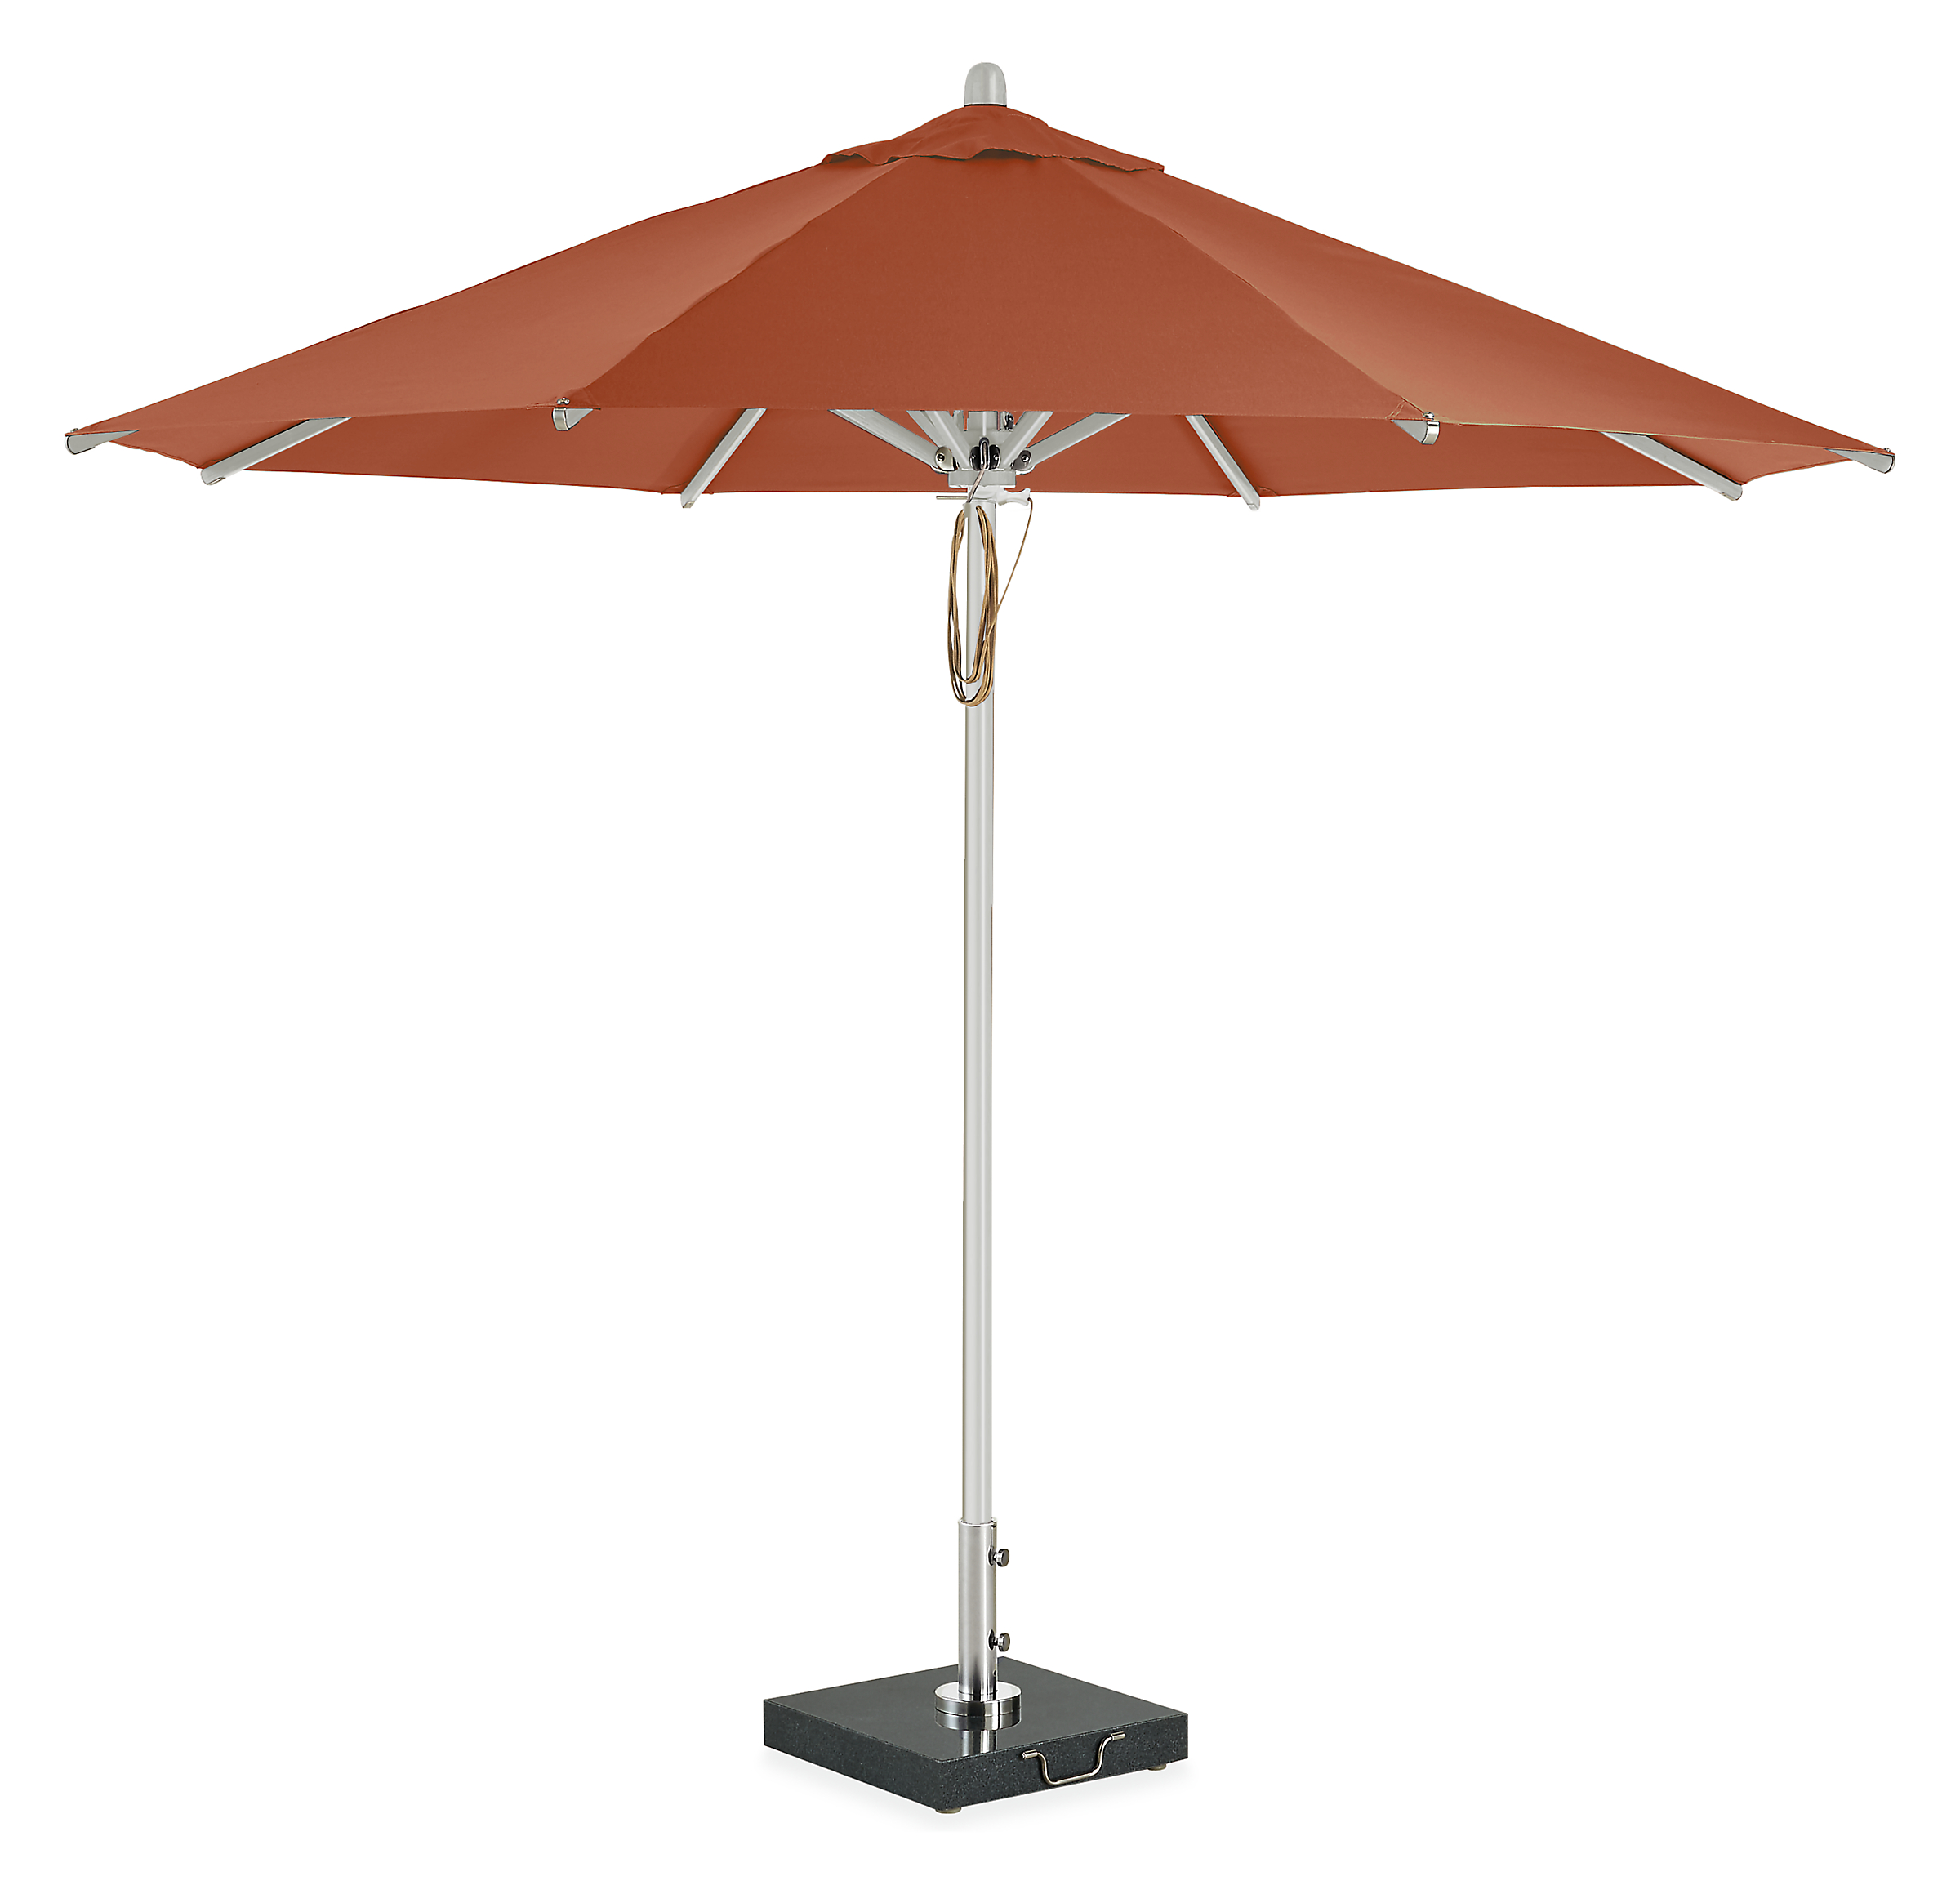 Cirro 10' Patio Umbrella in Terracotta with Aluminum Pole